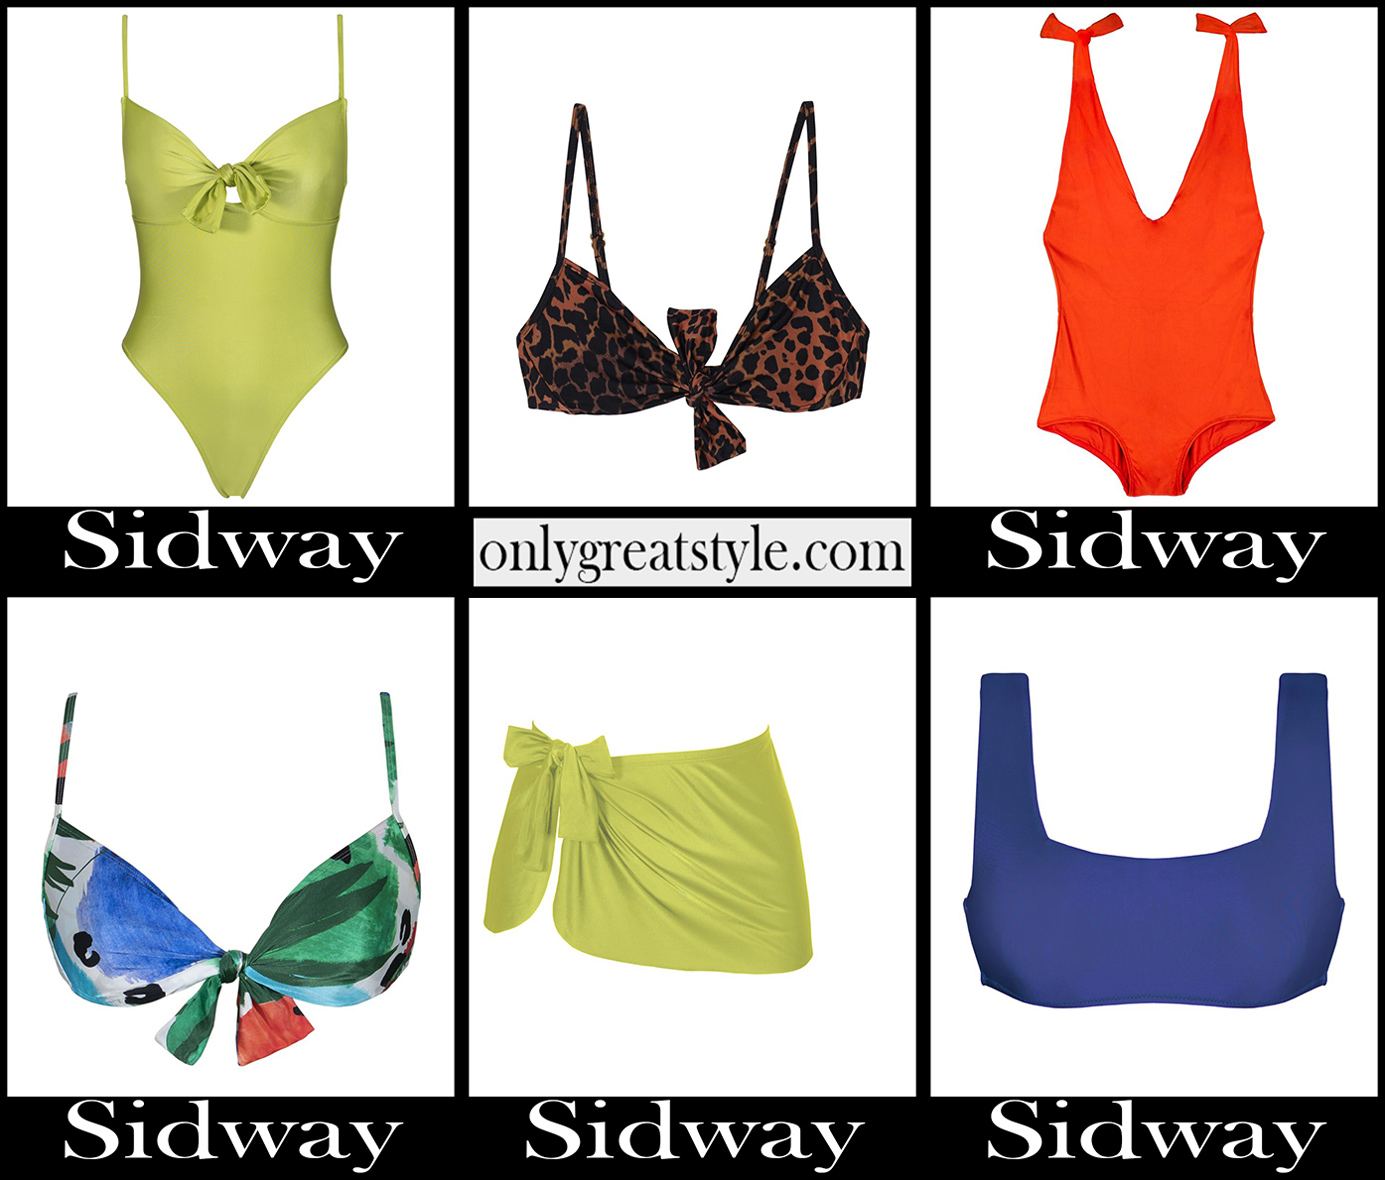 Sidway swimwear 2021 new arrivals womens beachwear